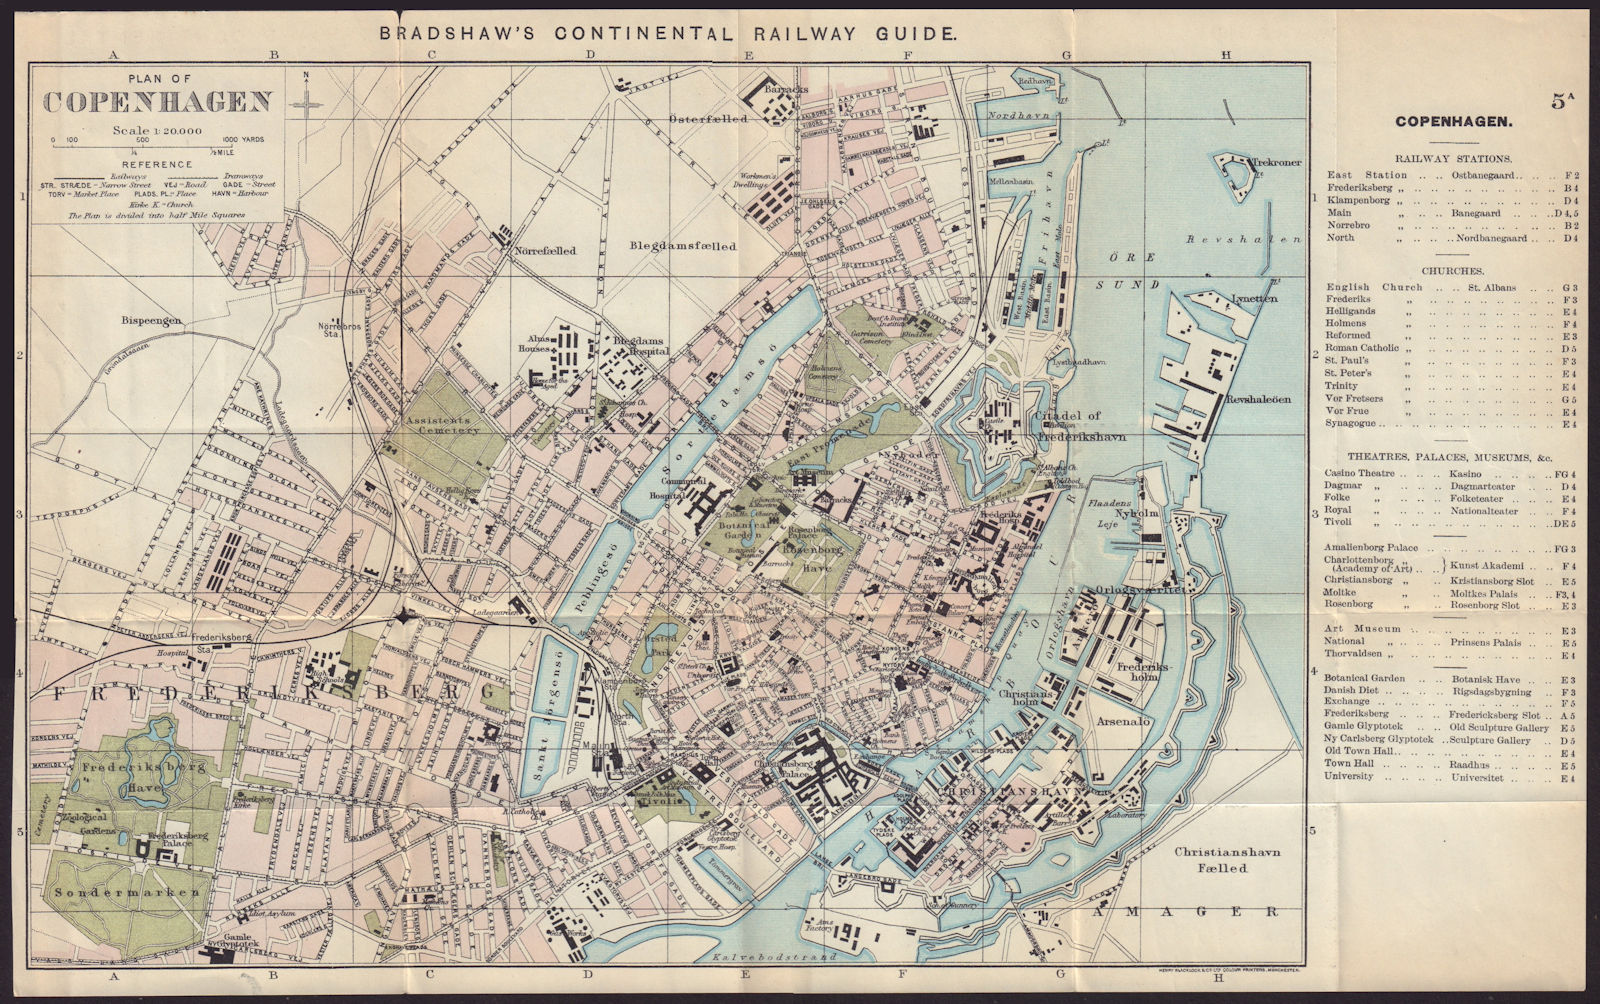 COPENHAGEN antique town plan city map. Denmark. BRADSHAW c1898 old